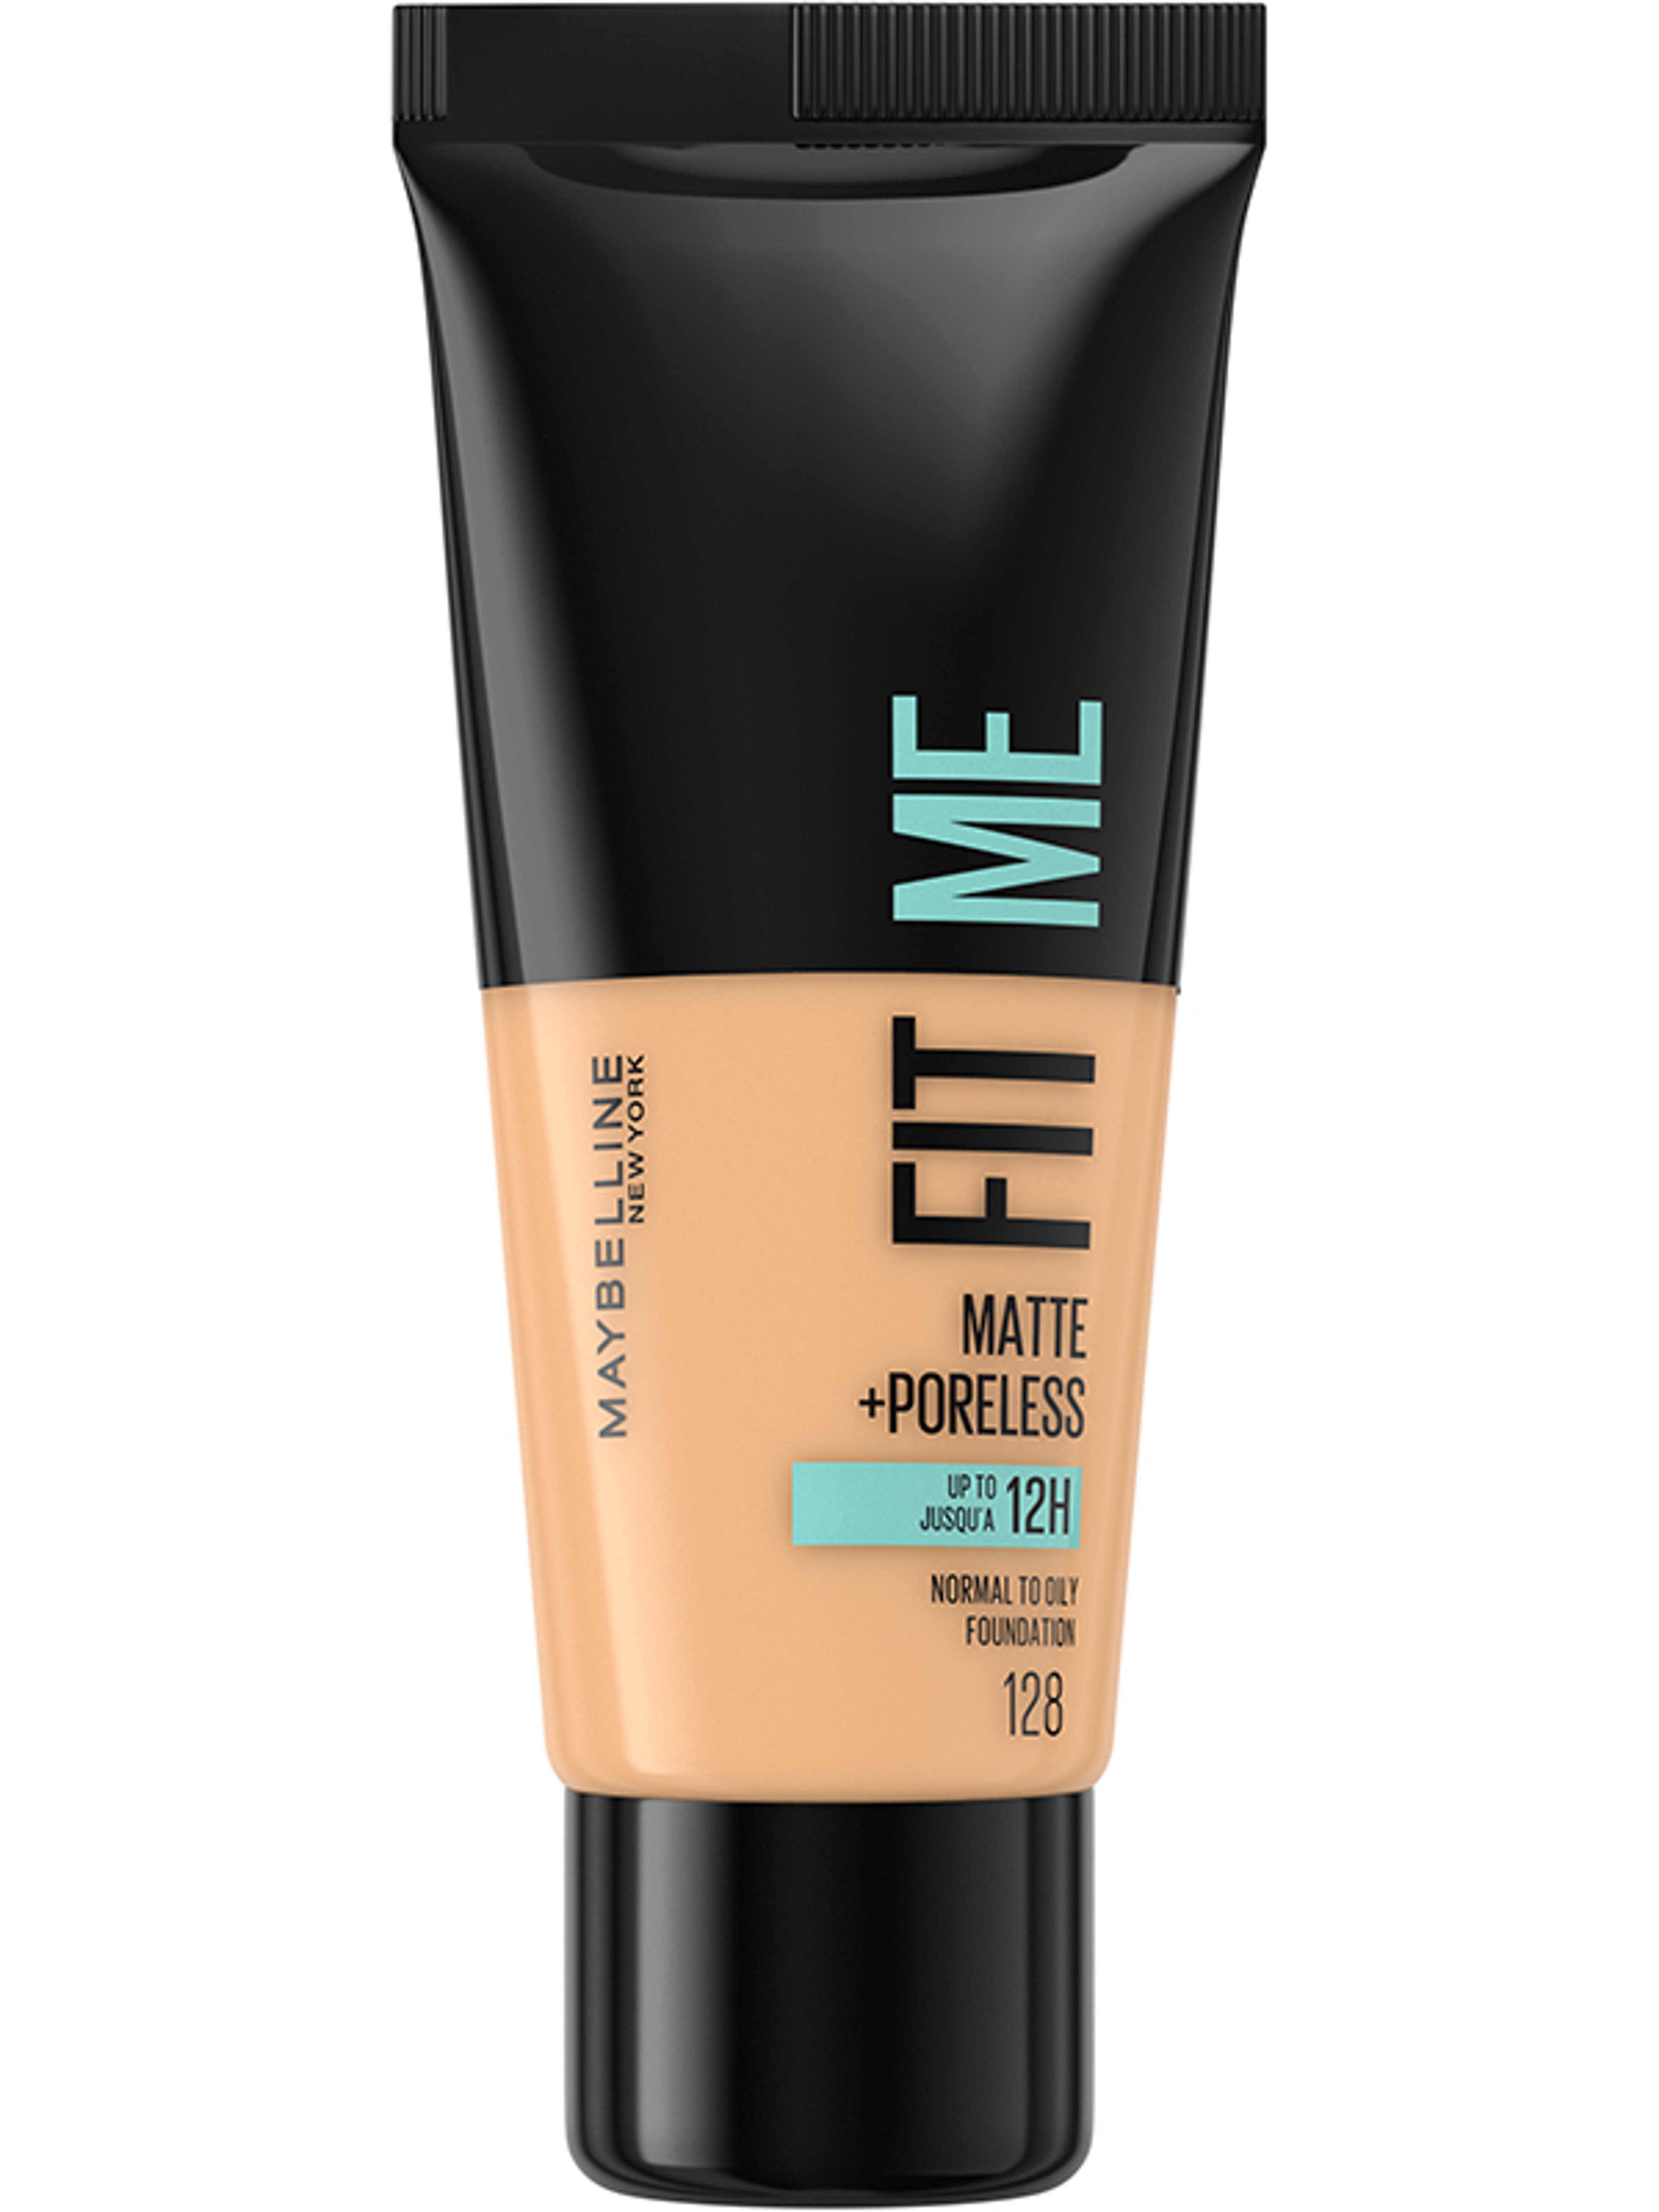 Maybelline Fit Me! Matte + Poreless alapozó /128 Warm Nude, 30 ml - 1 db